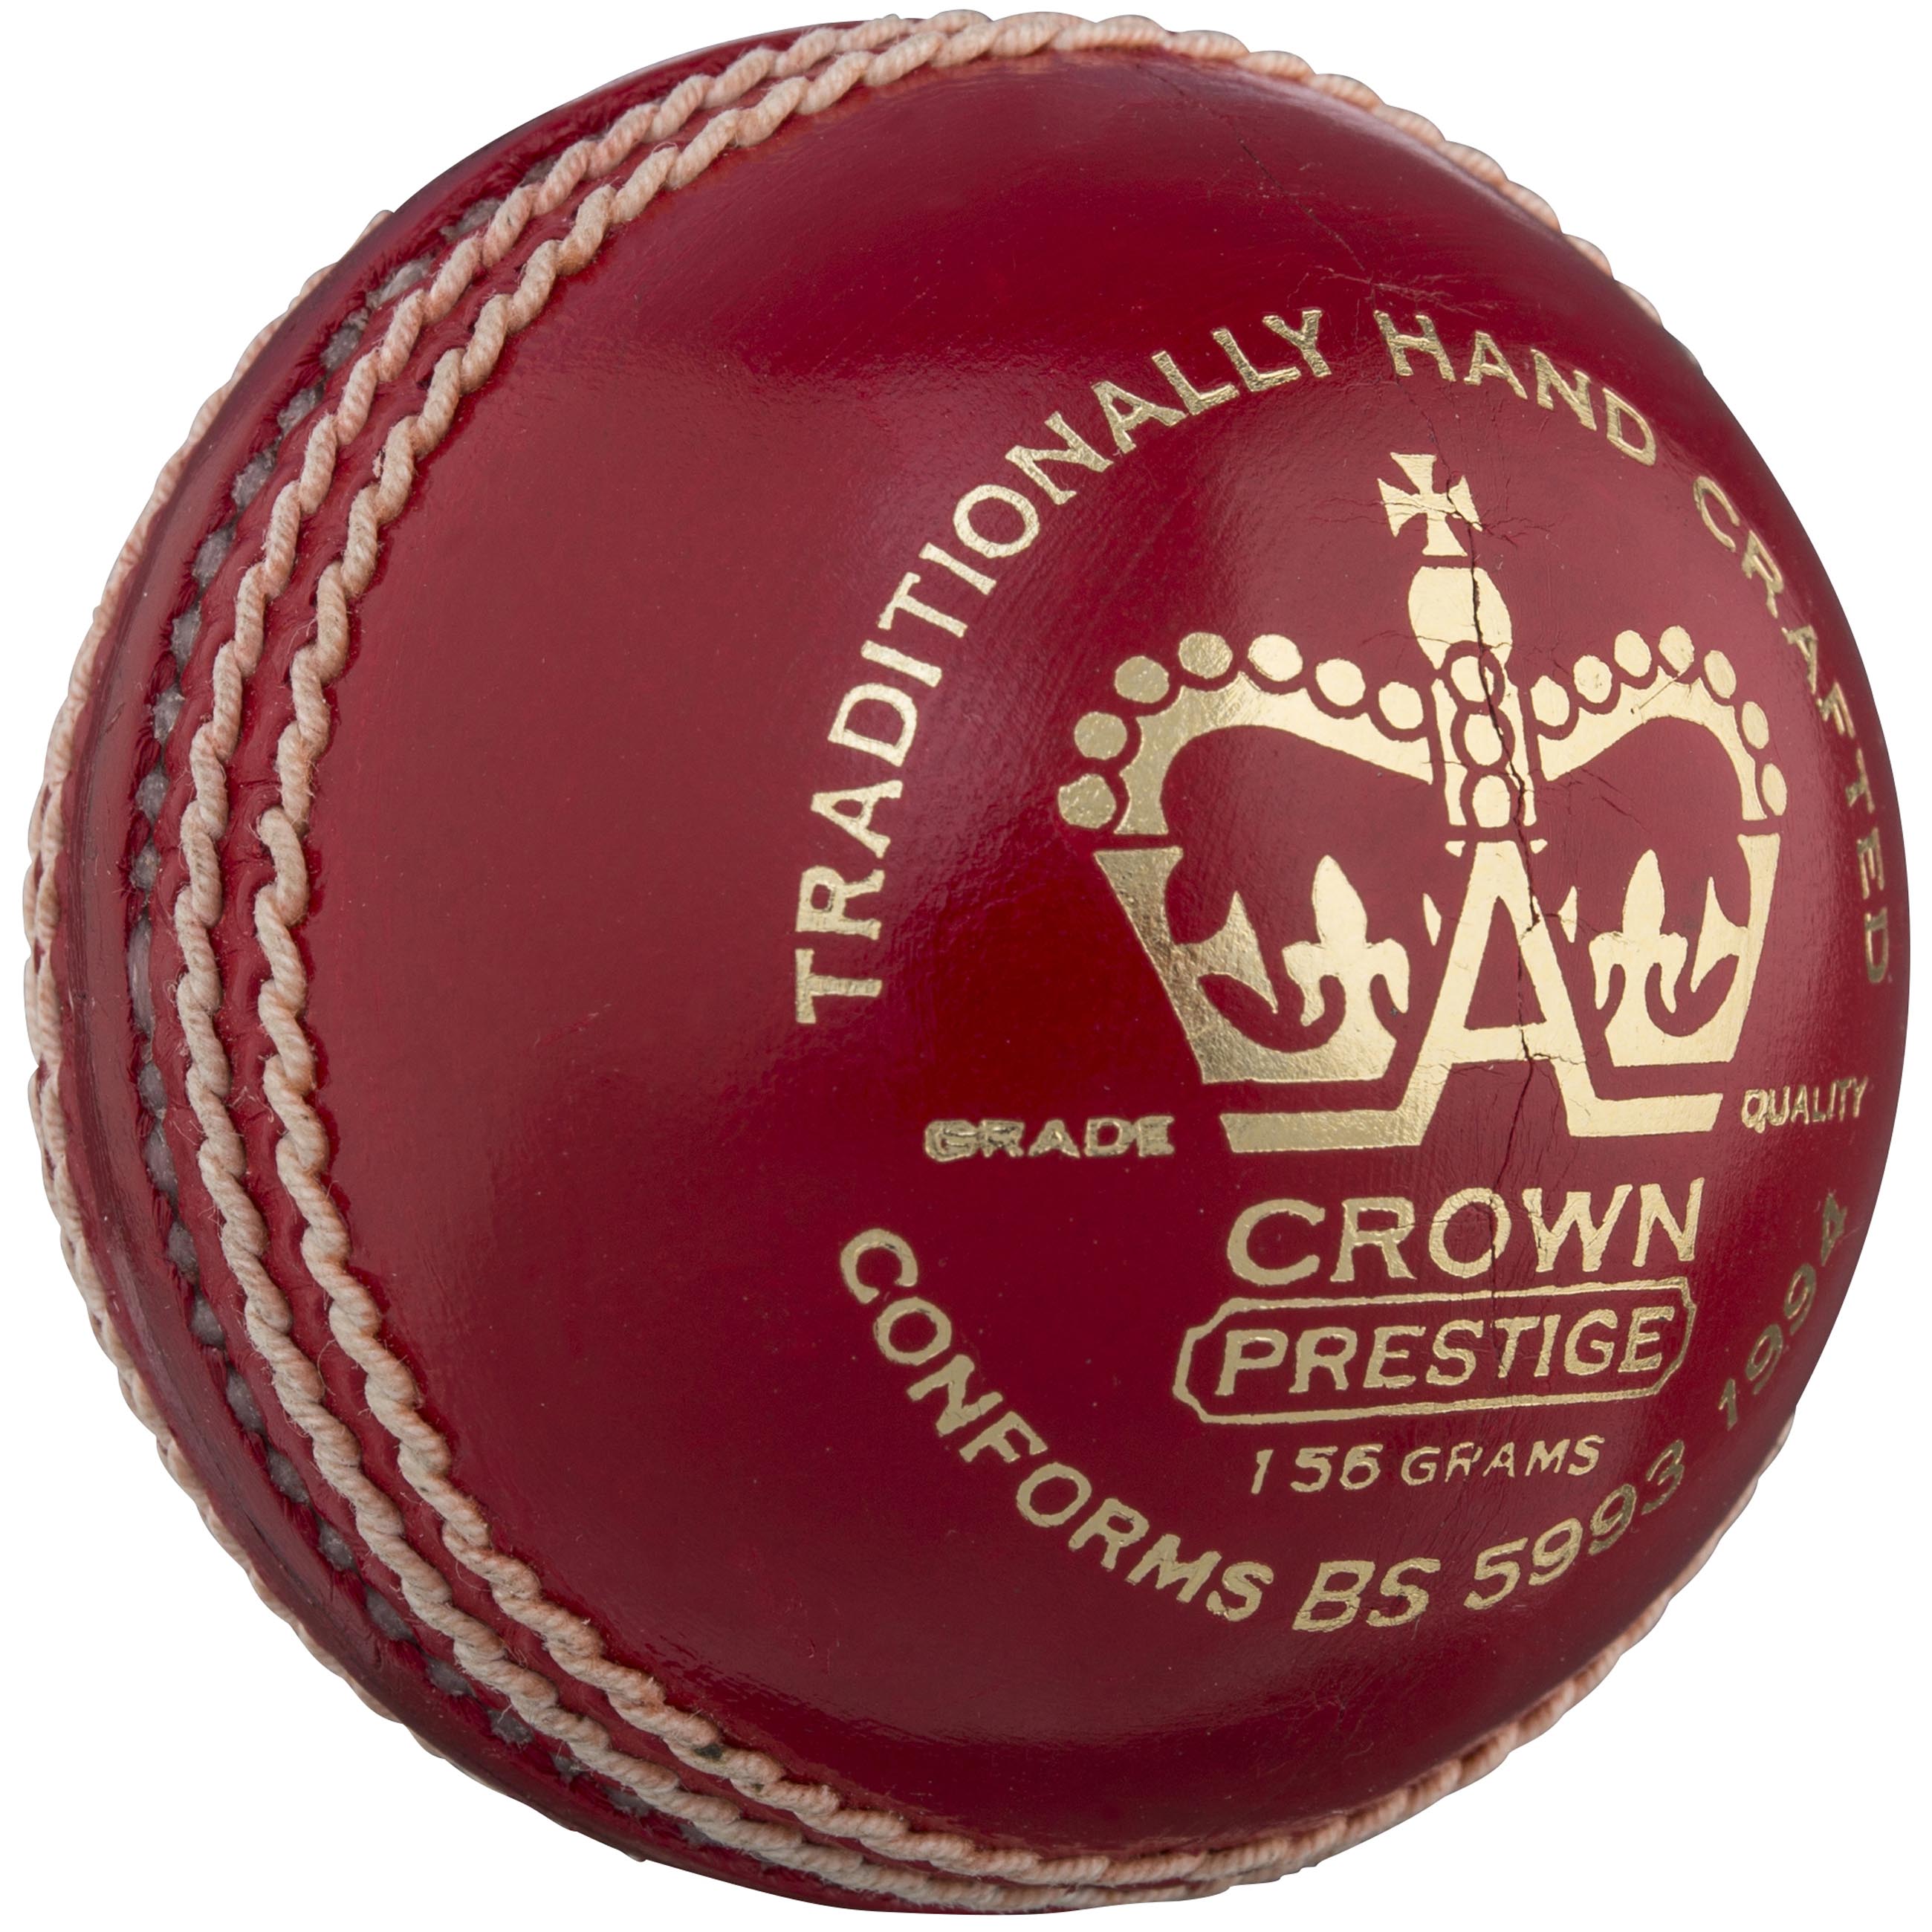 2600 CDAB19 5111005 Ball Crown Prestige Red Wax 156g Front